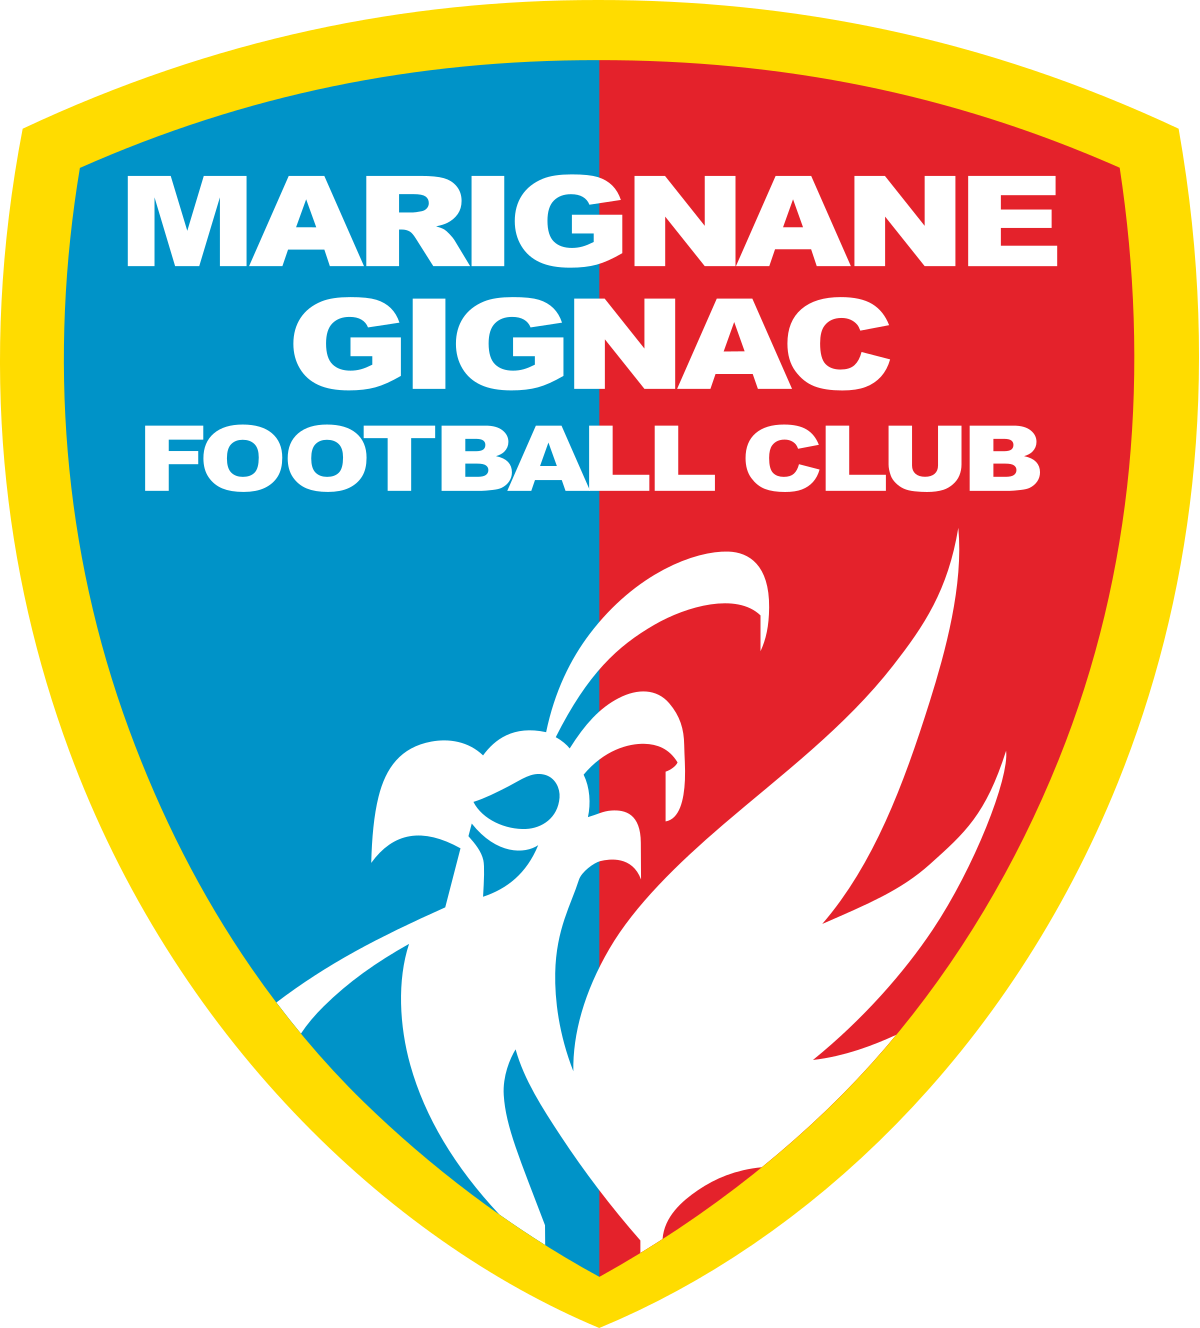 Marignane Gignac Football Club — Wikipédia